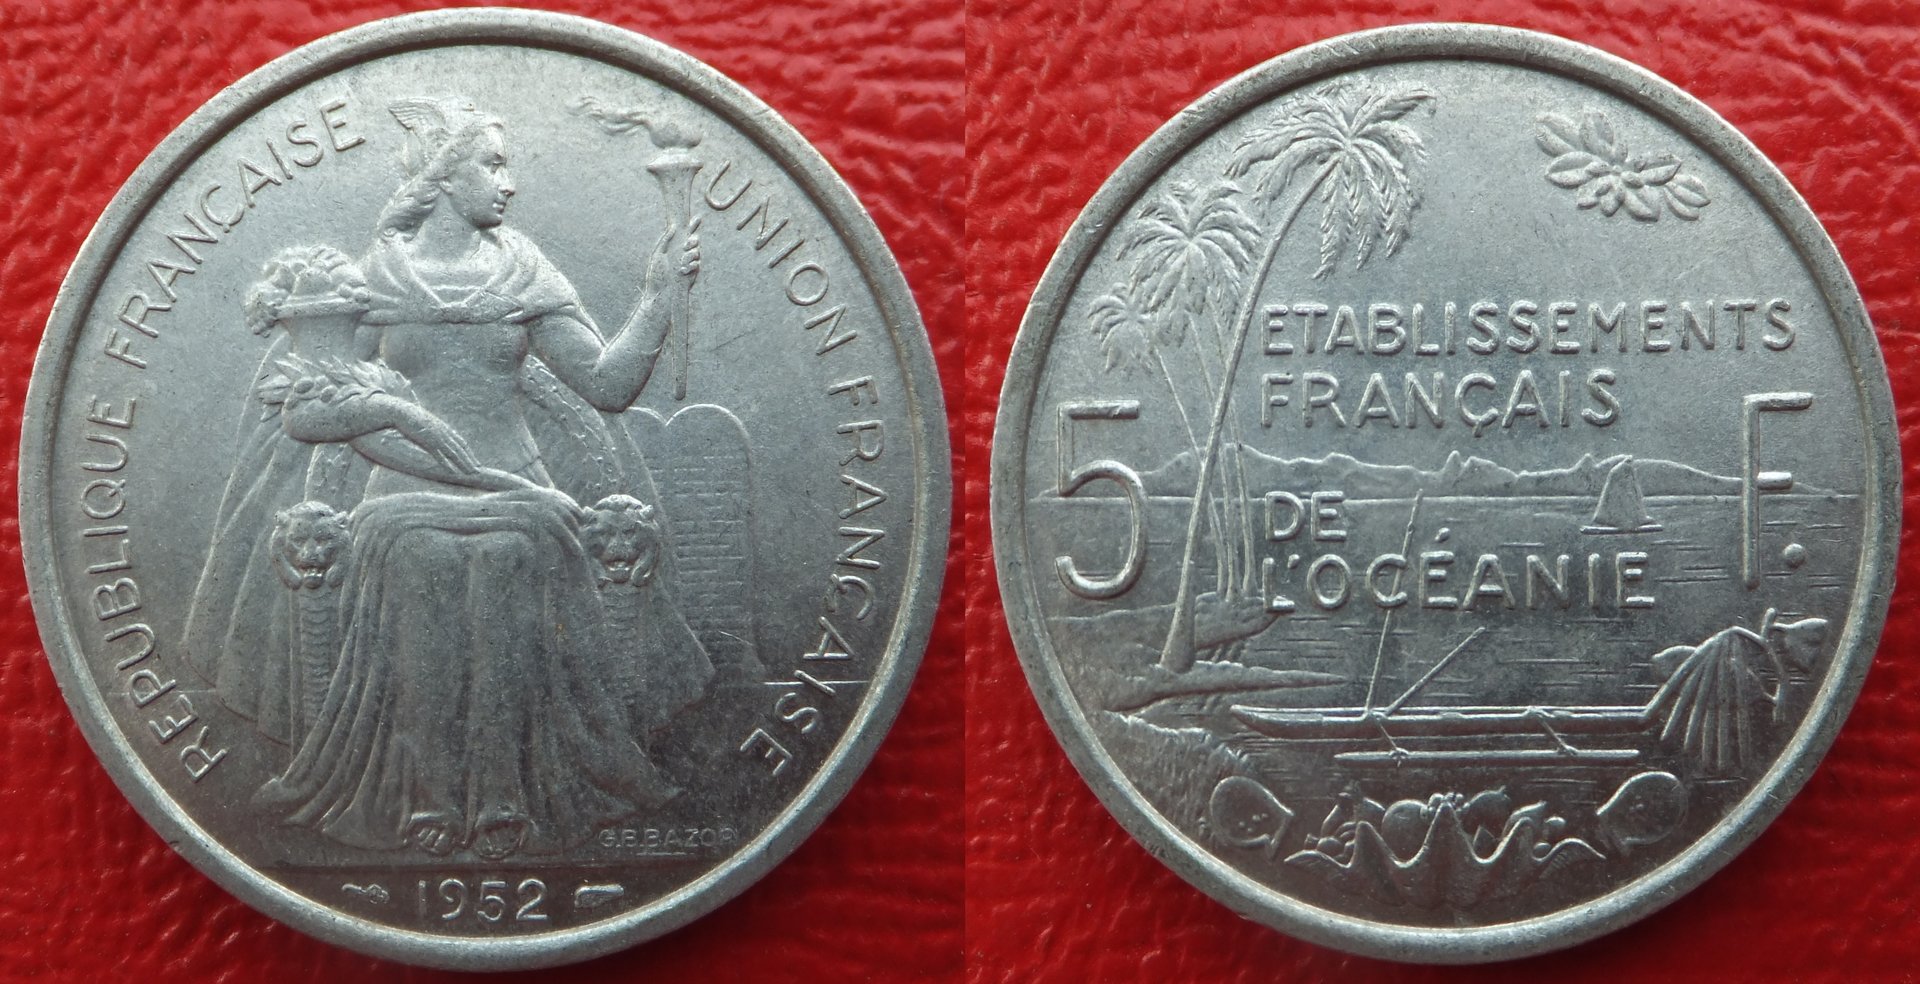 French Oceania 5 francs 1952 (3).JPG